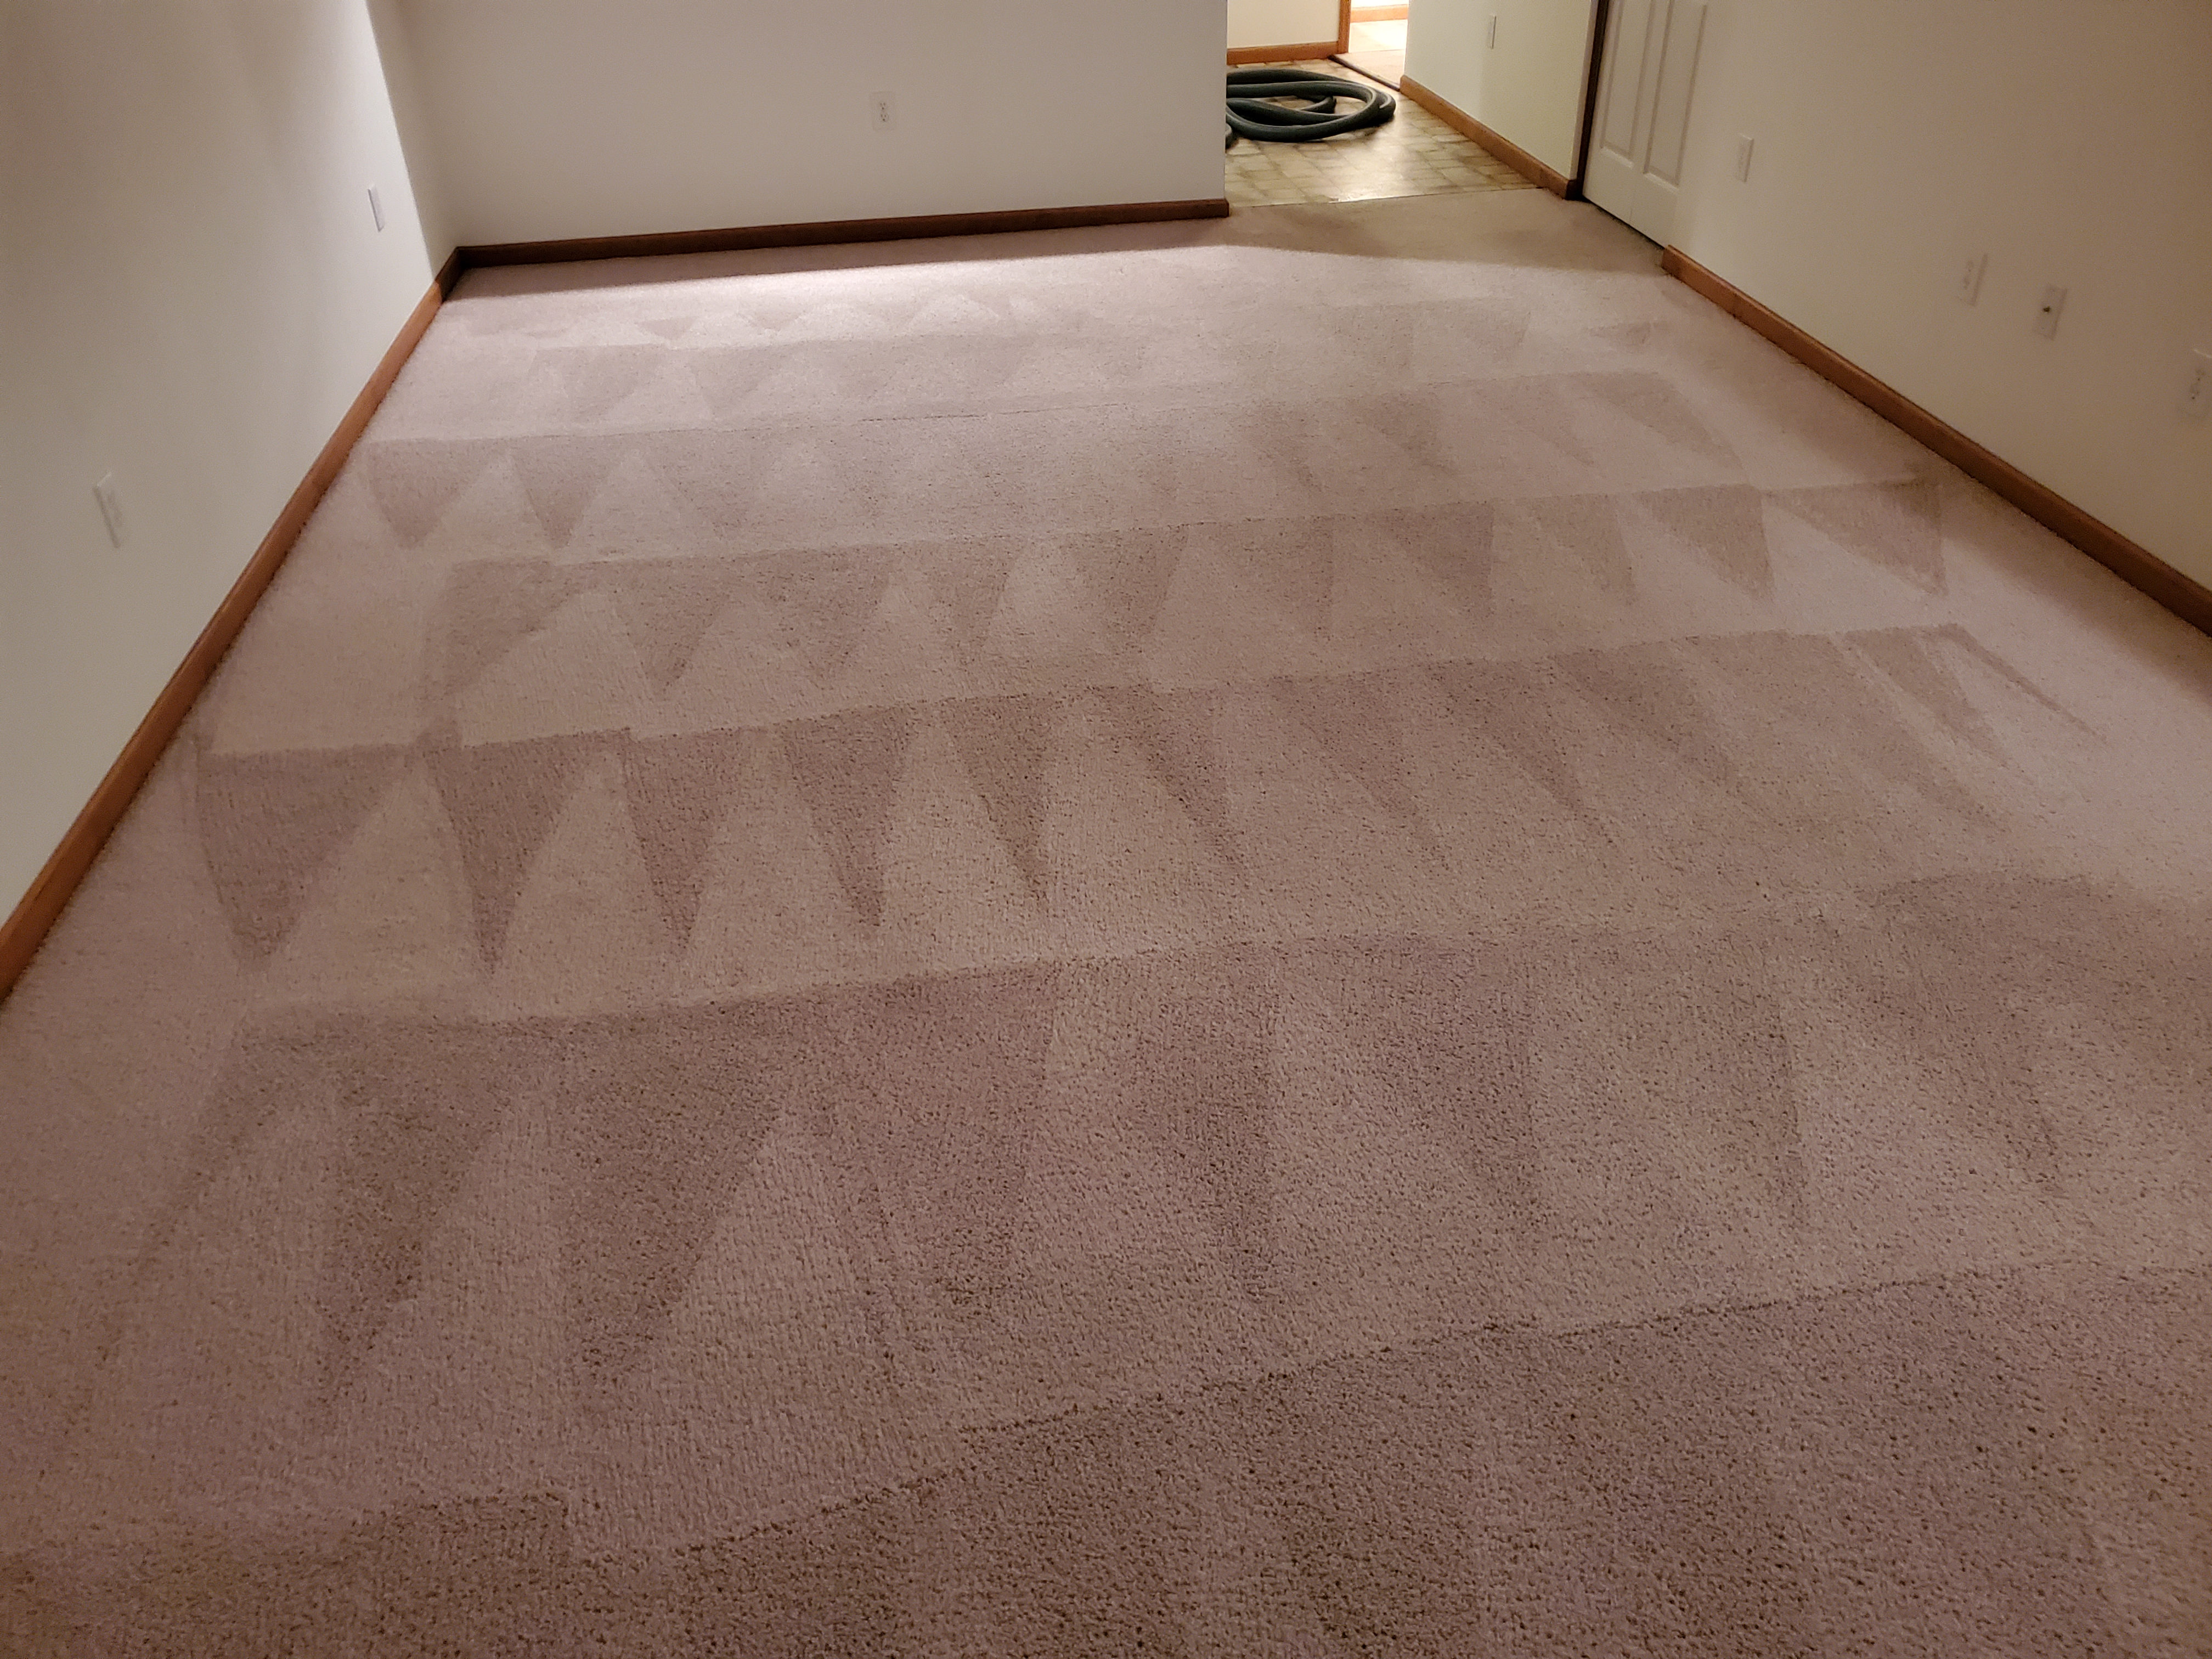 Carpet After Heaven's Best Carpet Cleaning